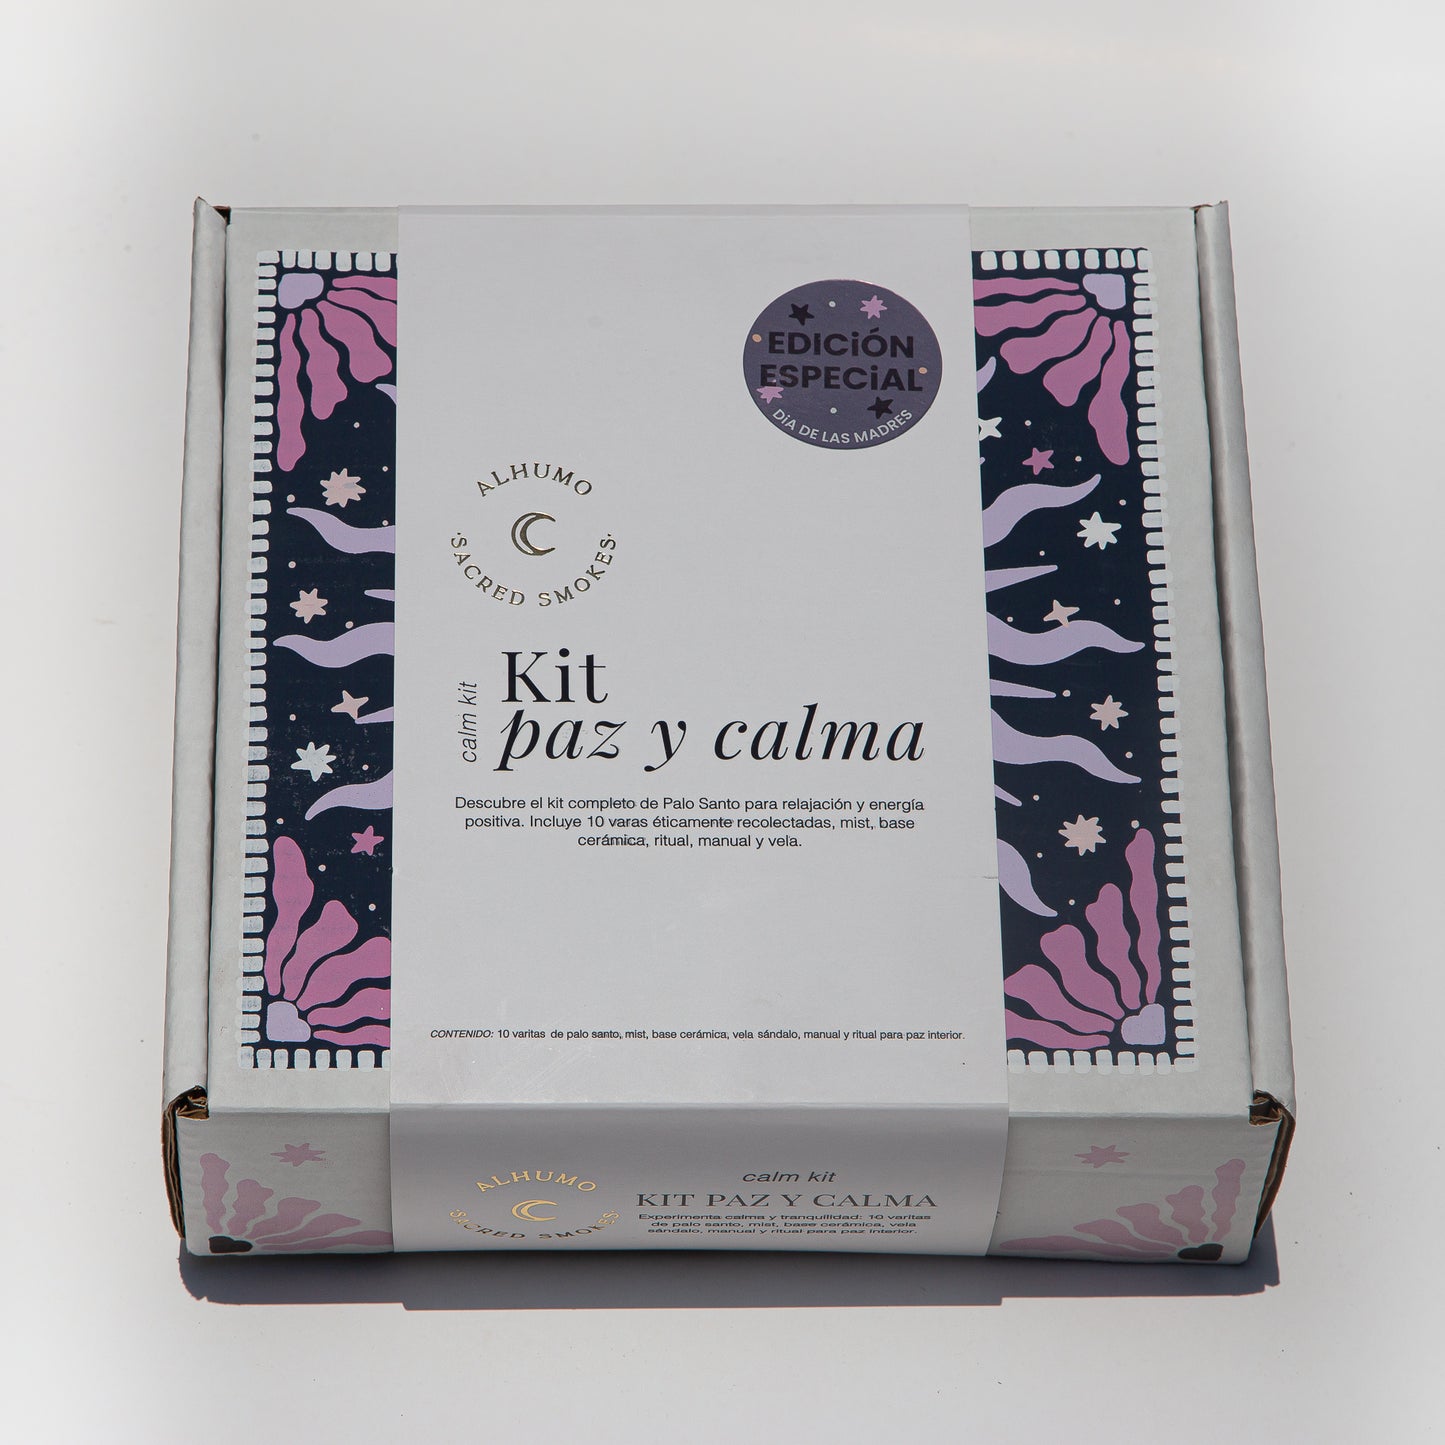 The Calm Kit - Edición especial: Día de las Madres